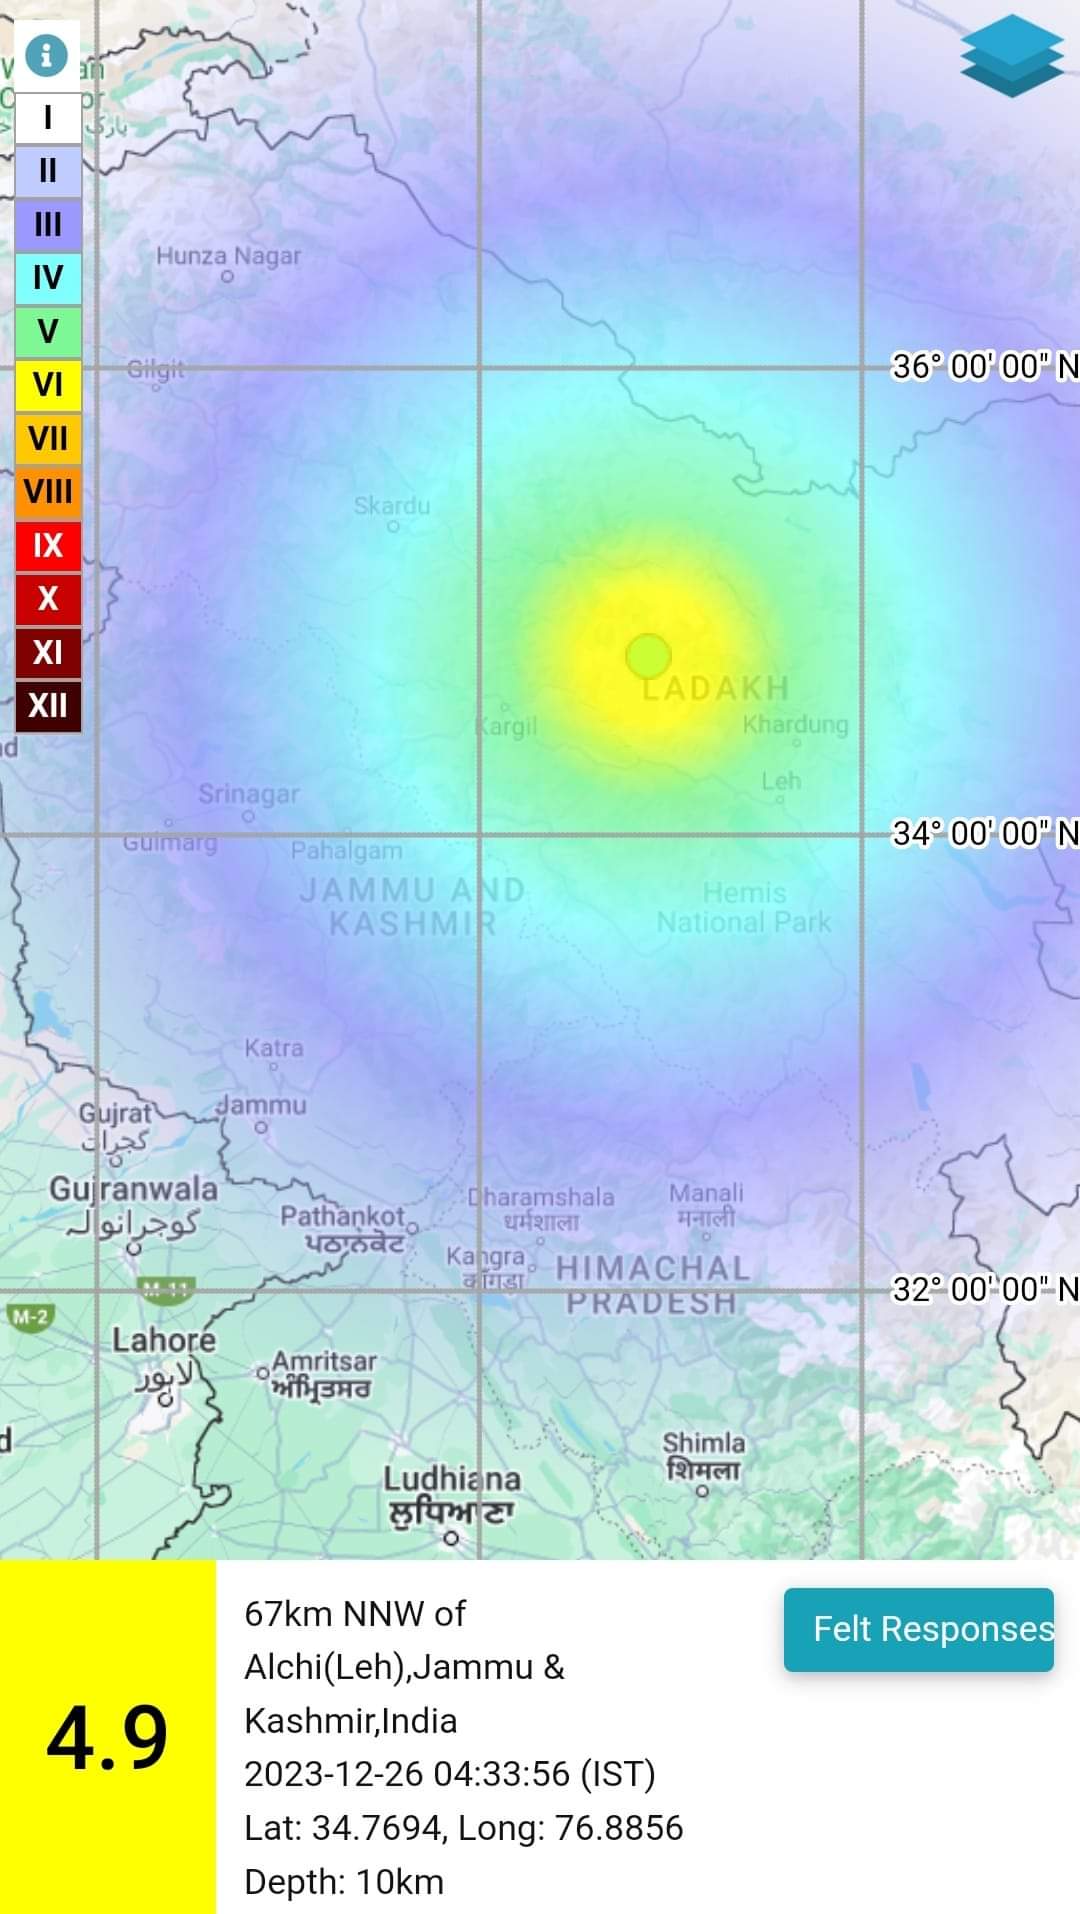 Two Earthquakes of magnitude 4.6 & 4.9 hits Ladakh